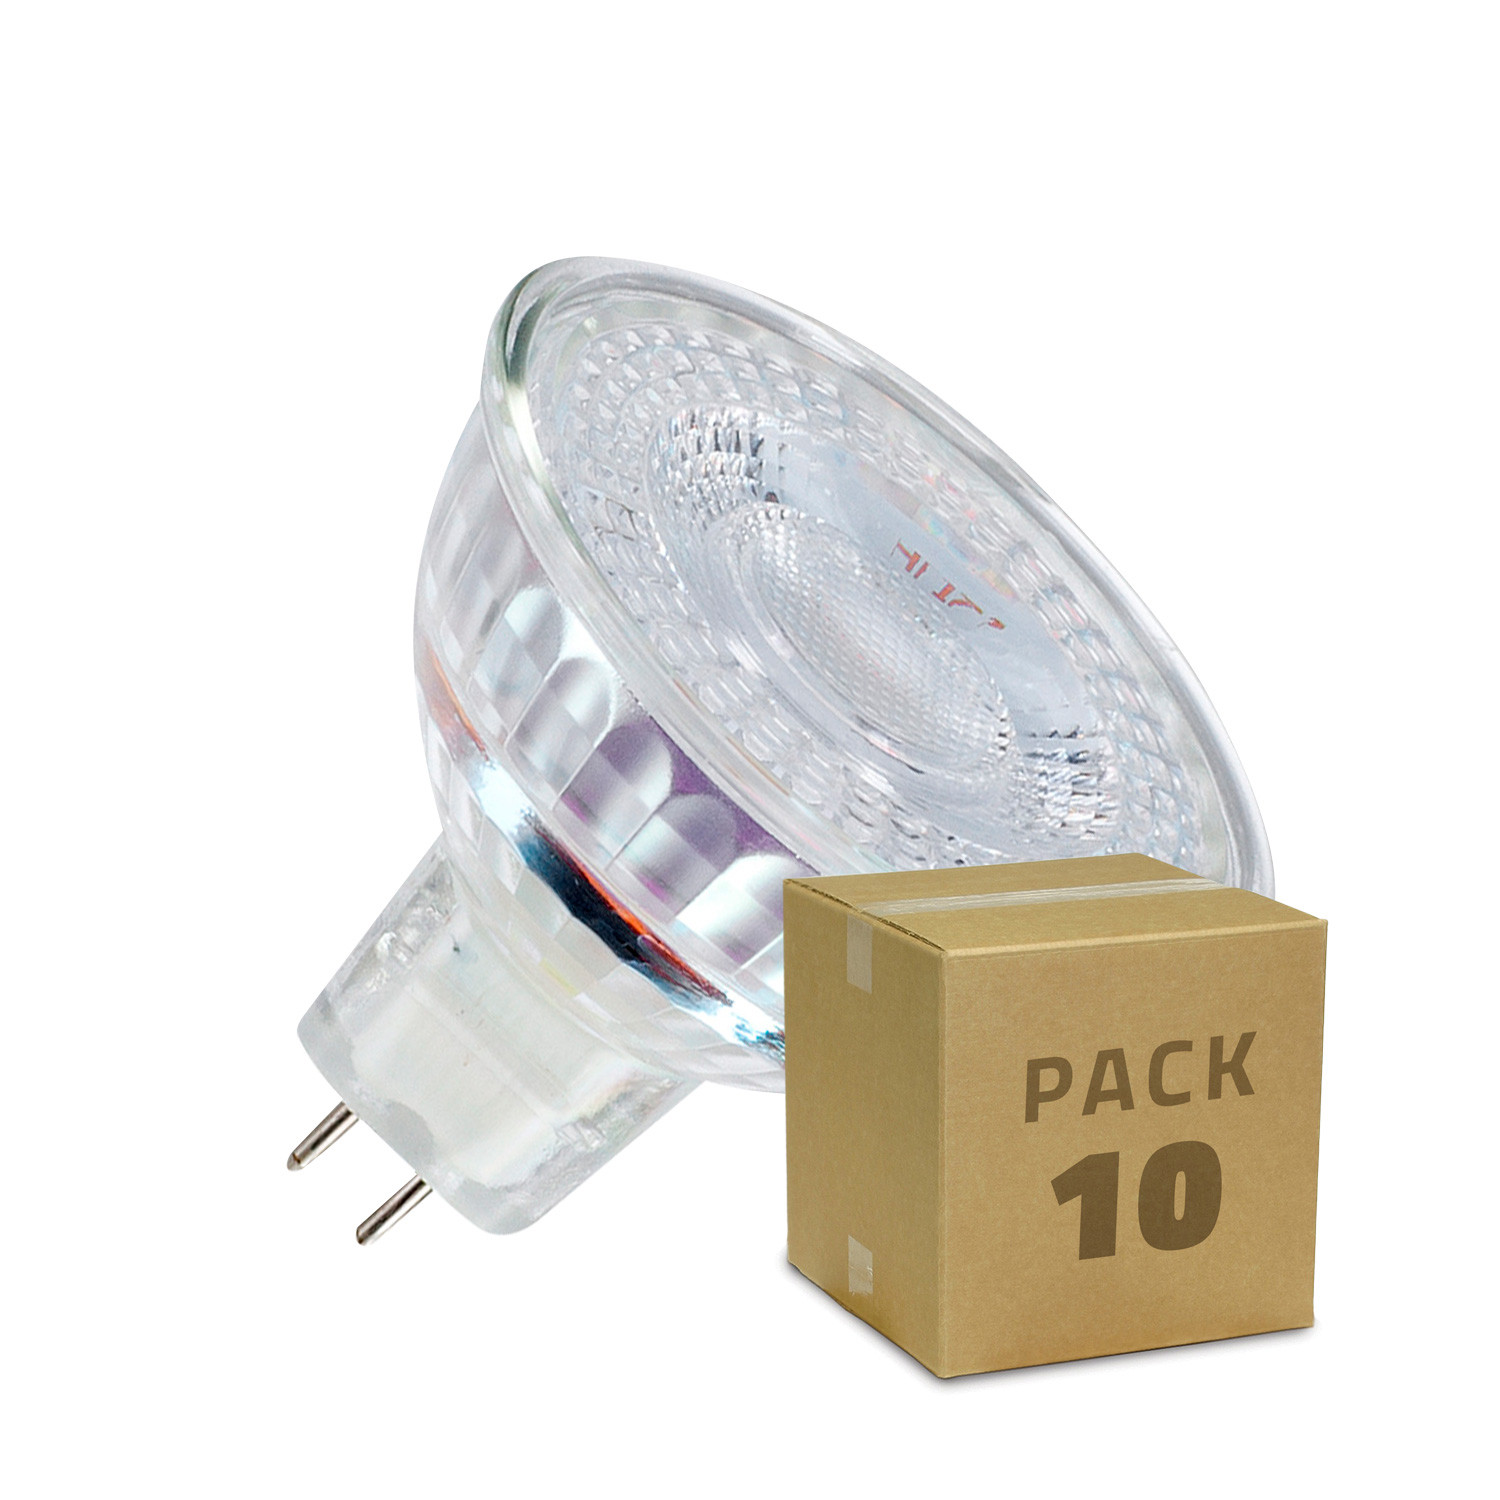 Auroch nostalgia Continente Pack Bombillas LED GU5.3 MR16 SMD Cristal 12V 5W (10 un) - efectoLED